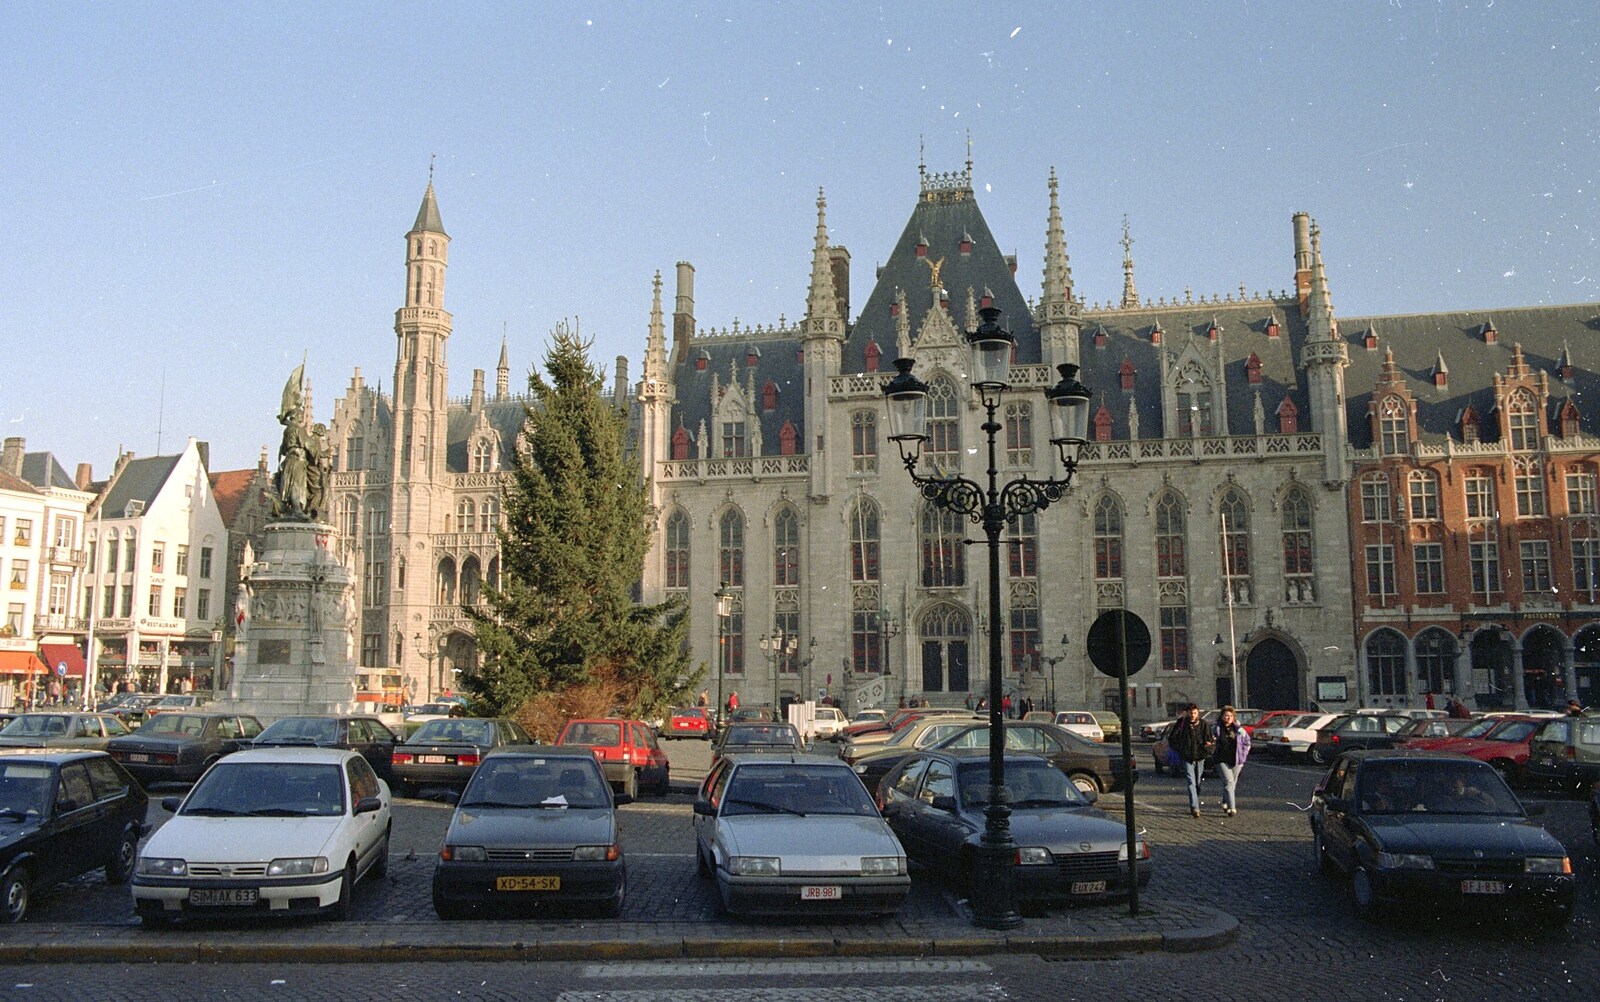 L'Hotel du Ville from Clays Does Bruges, Belgium - 19th December 1992